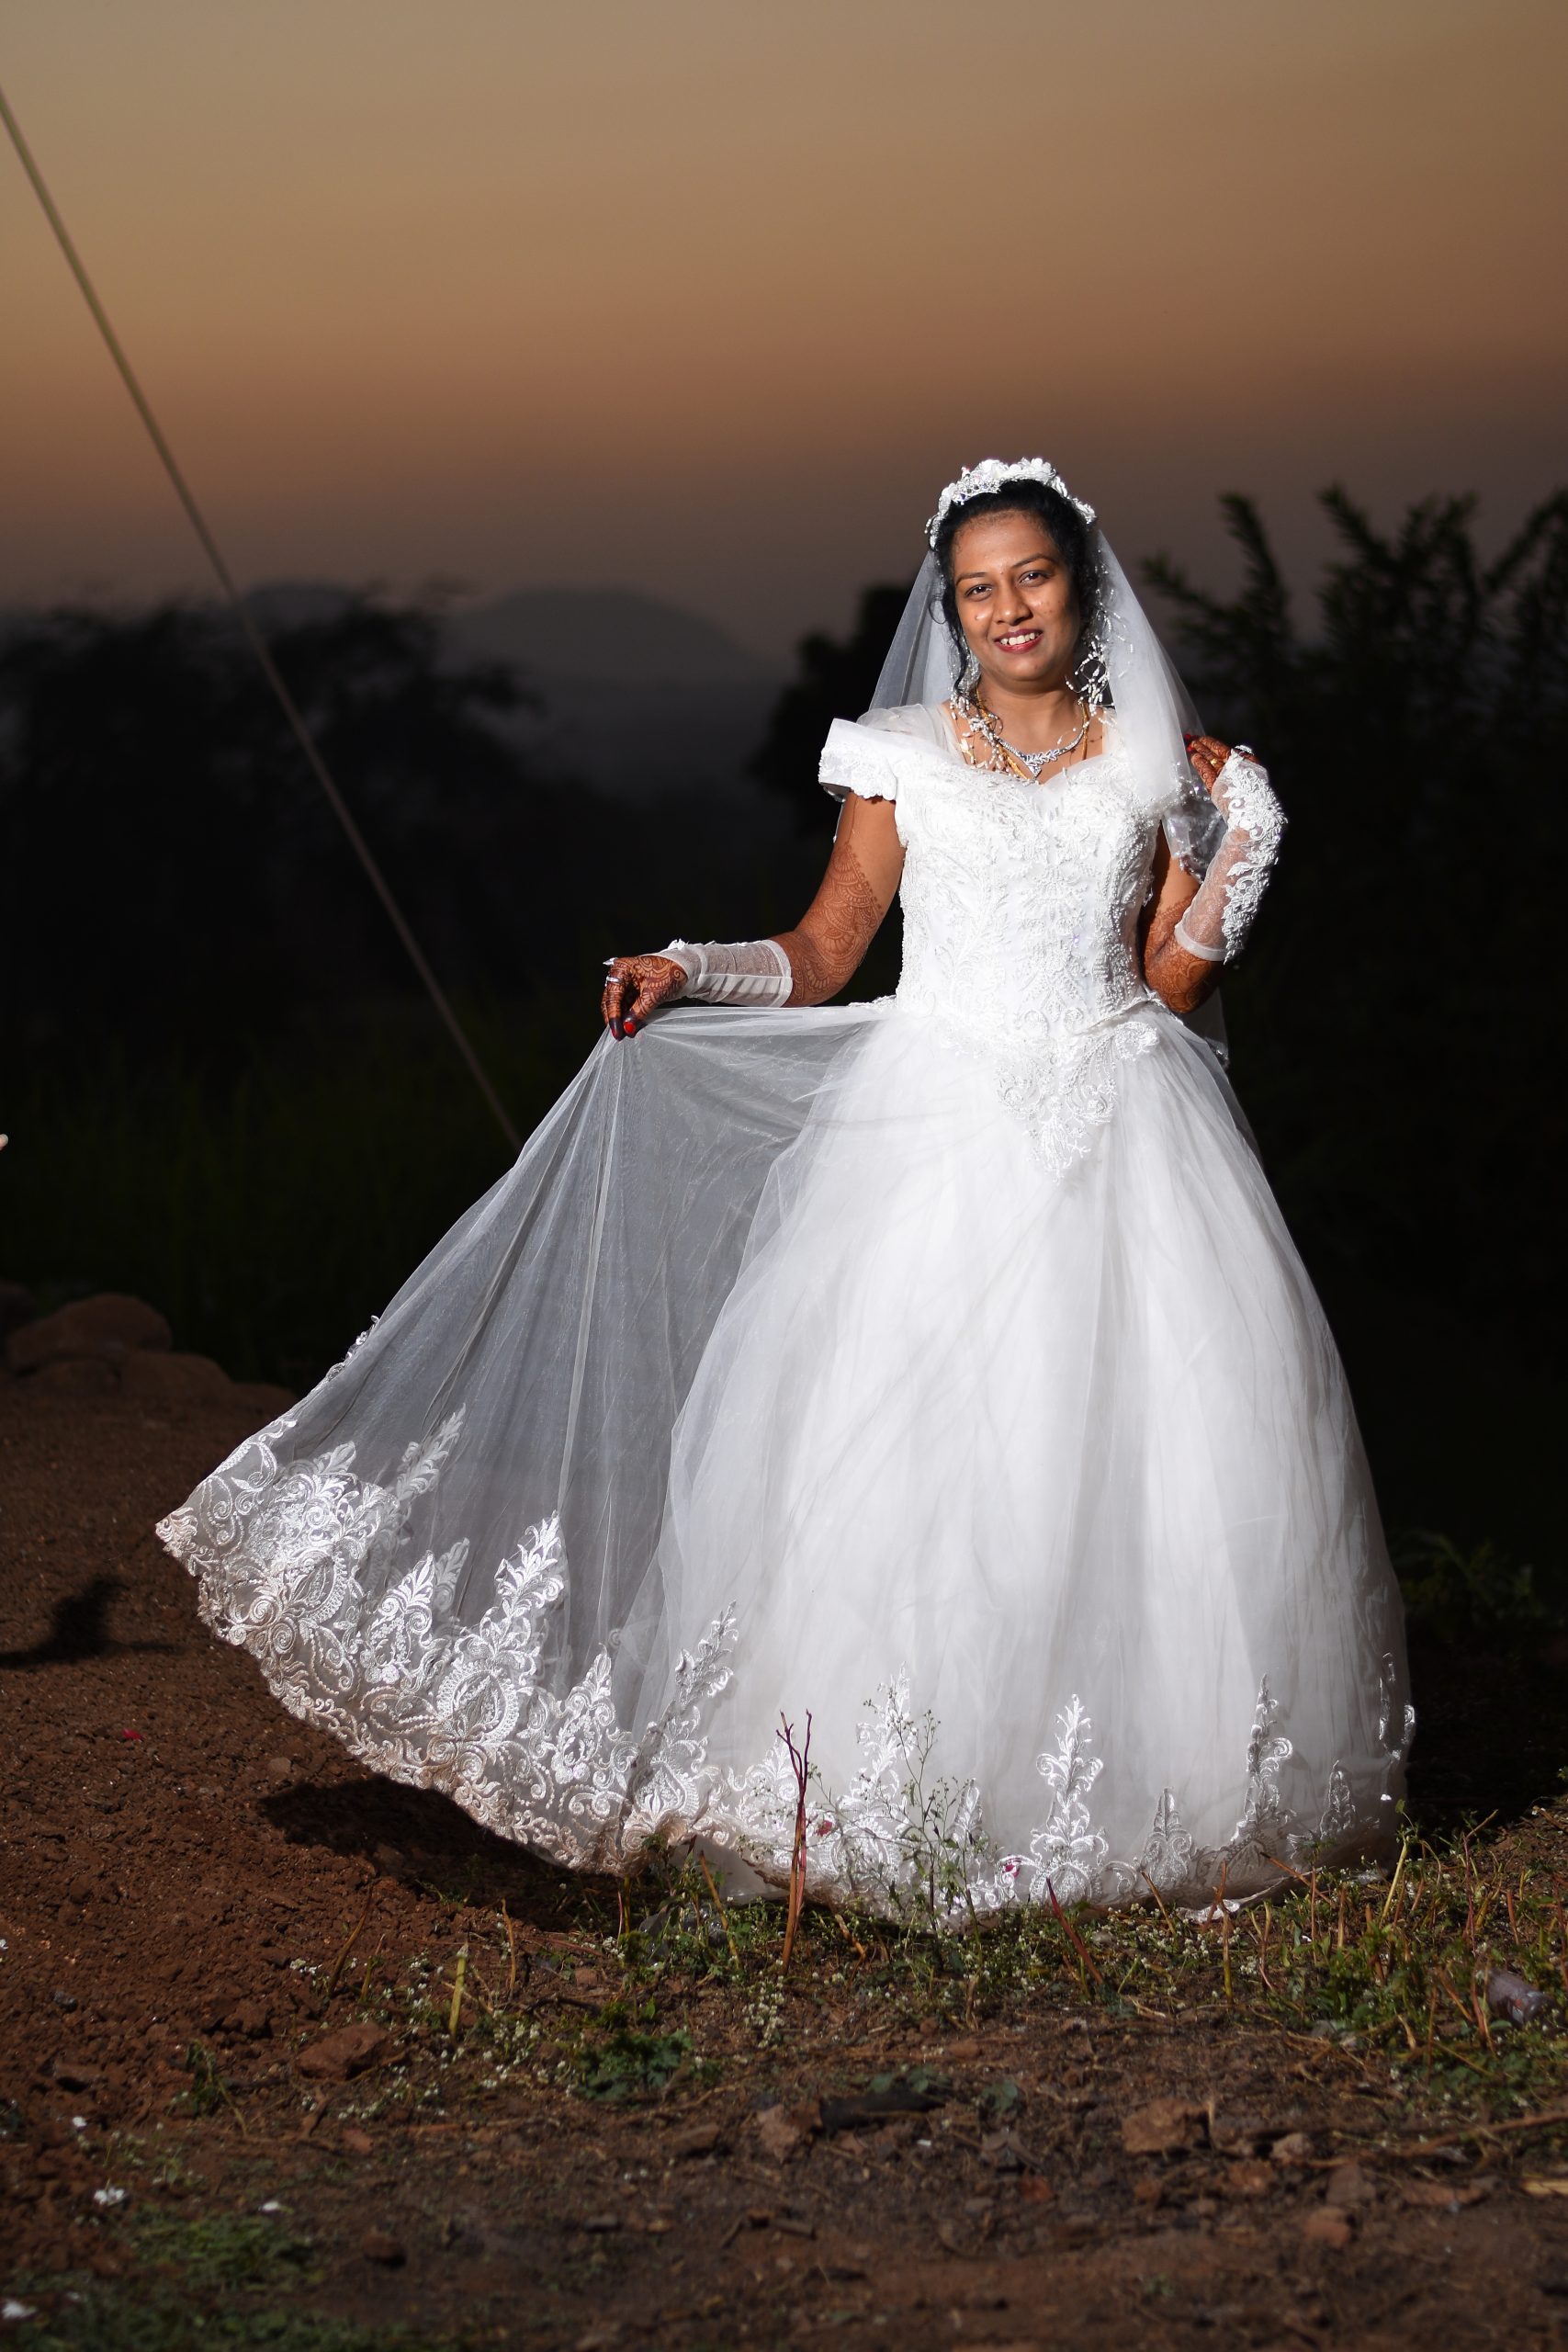 A Christian bride